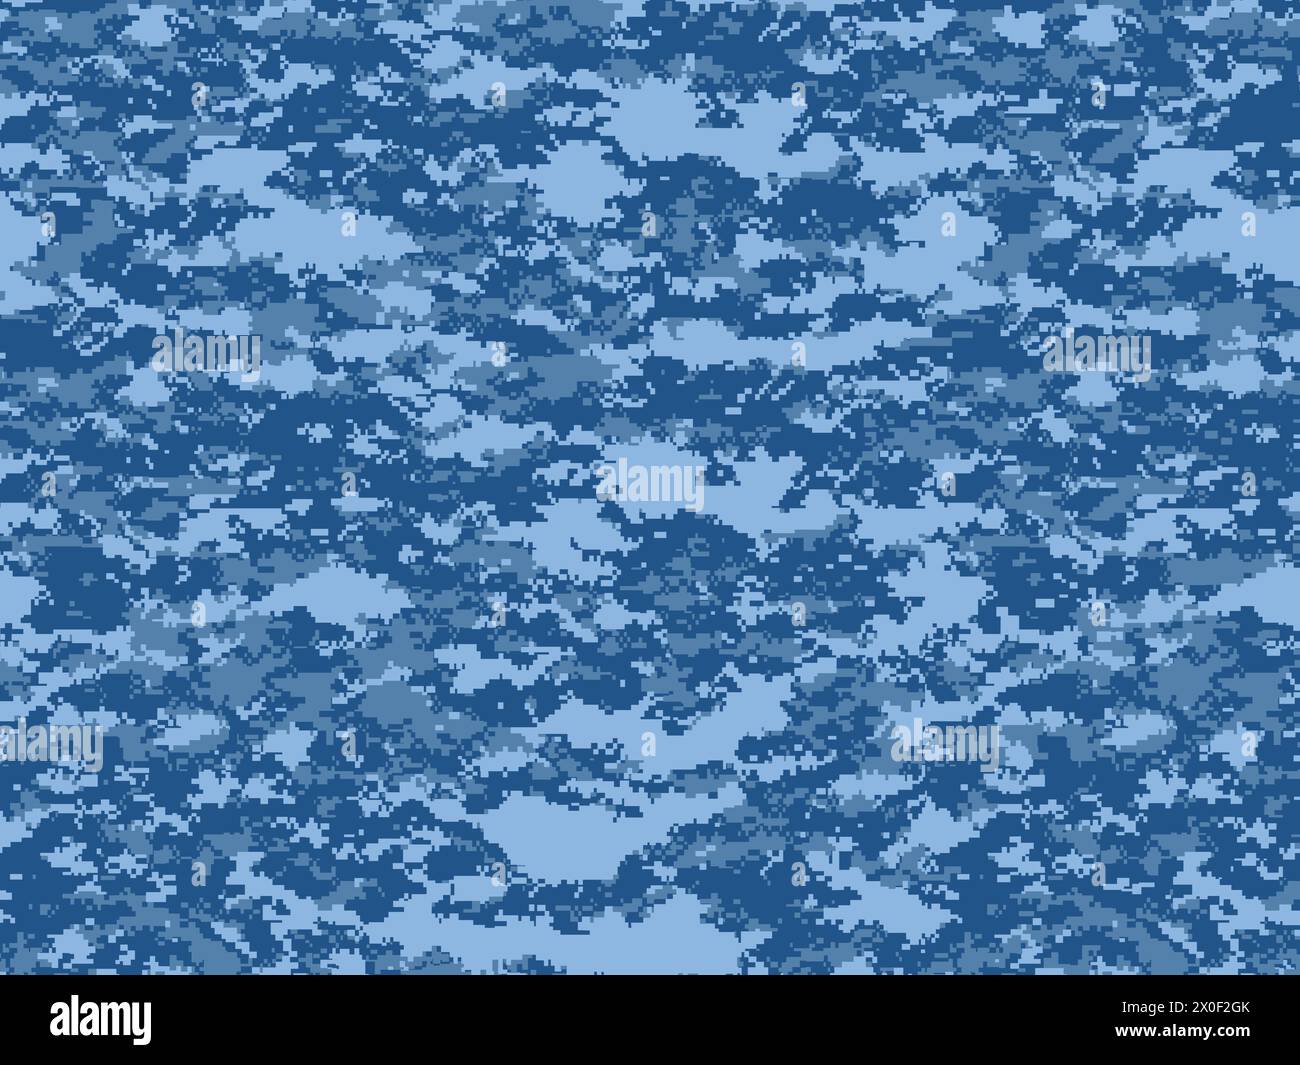 Navy Marpat Digital Camouflage Seamless Pattern Stock Vector